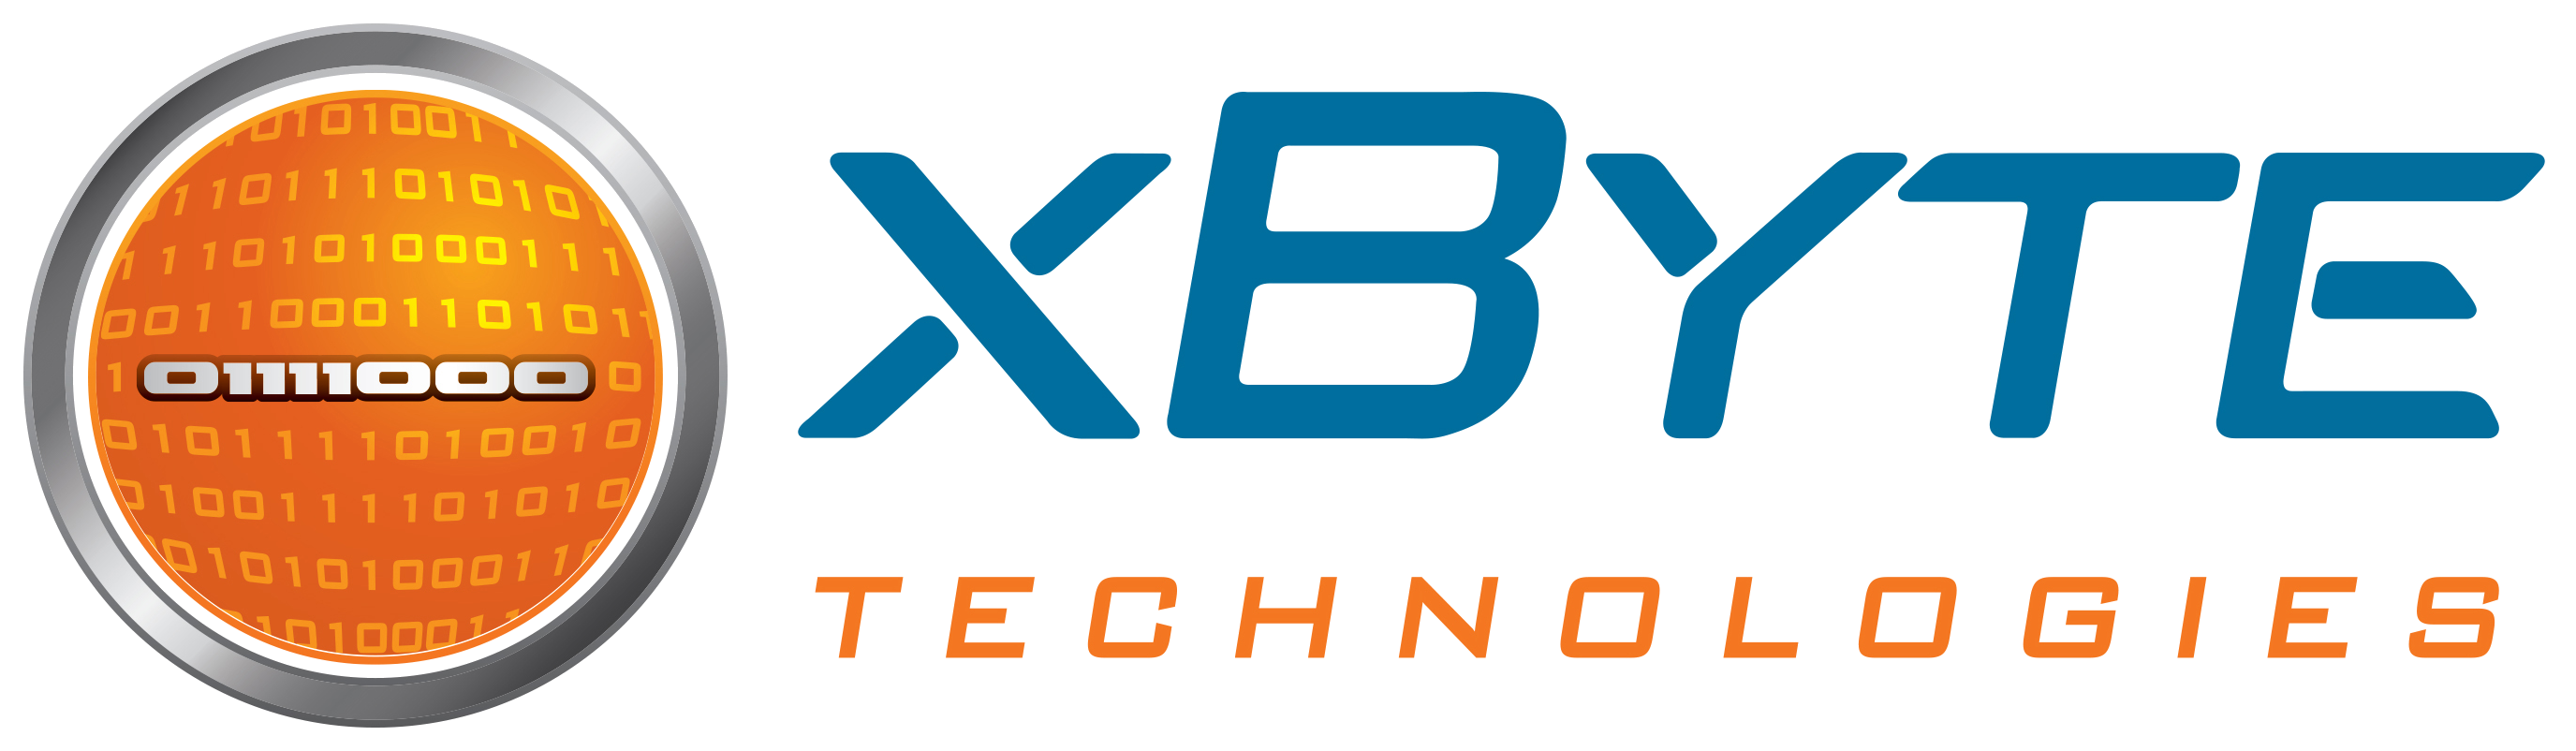 xByte-Transparent-BG